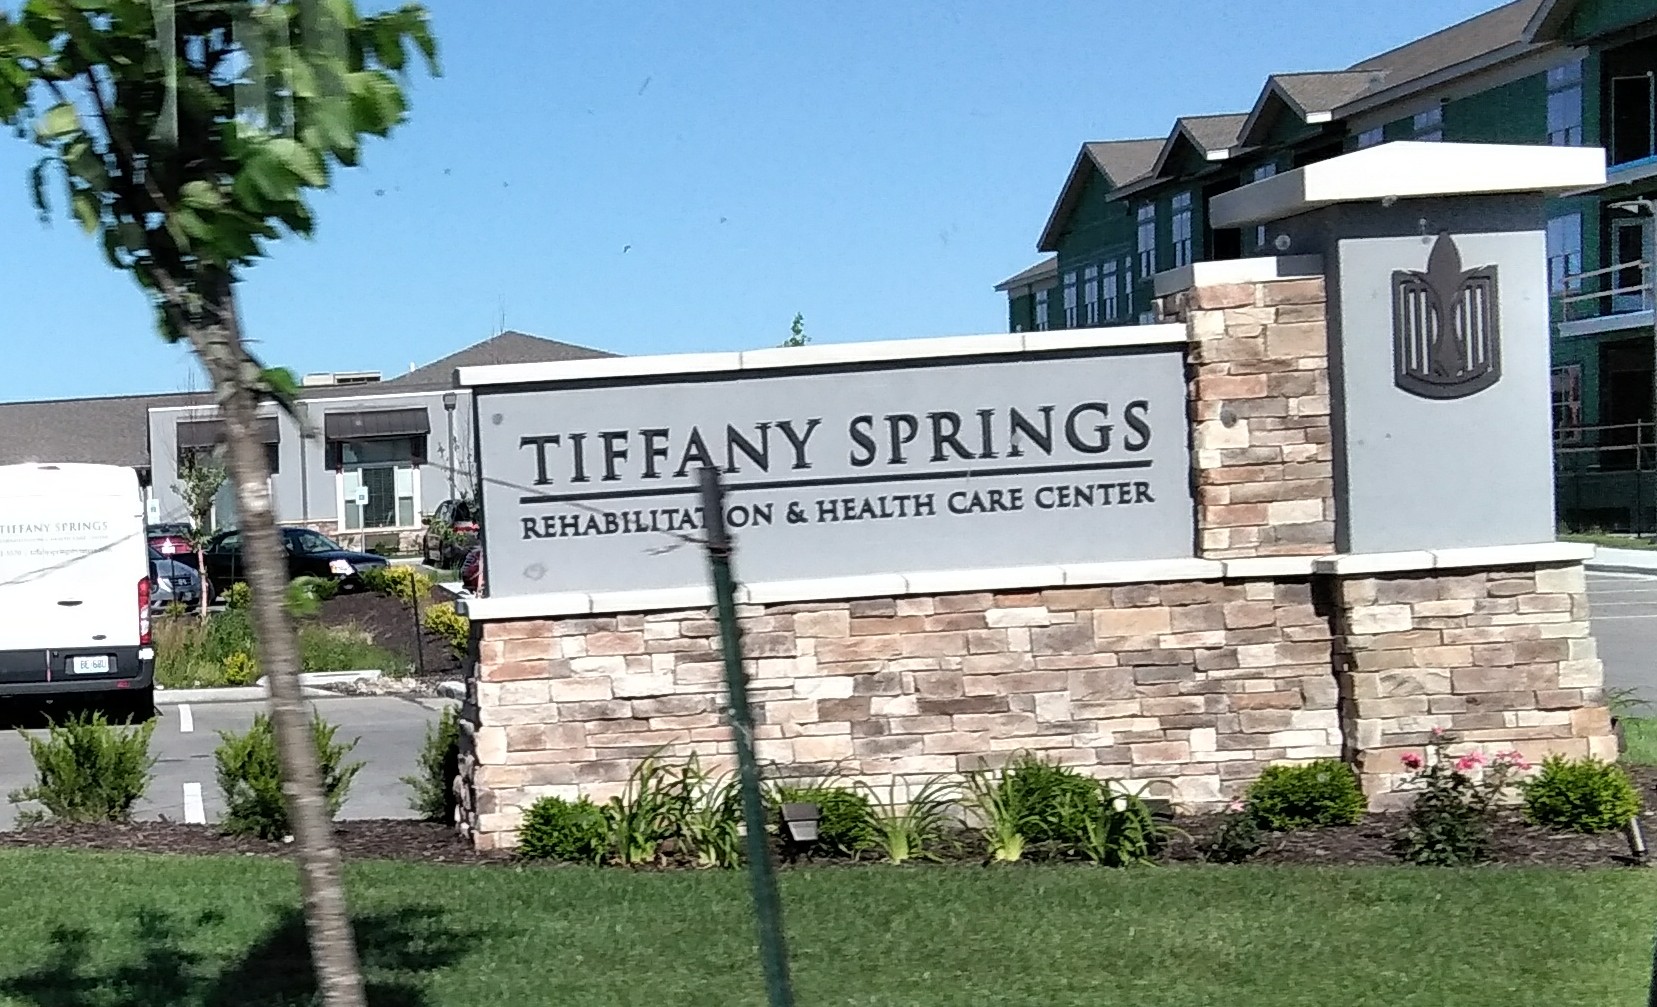 Tiffany Springs Rehabilitation & Health Care Center